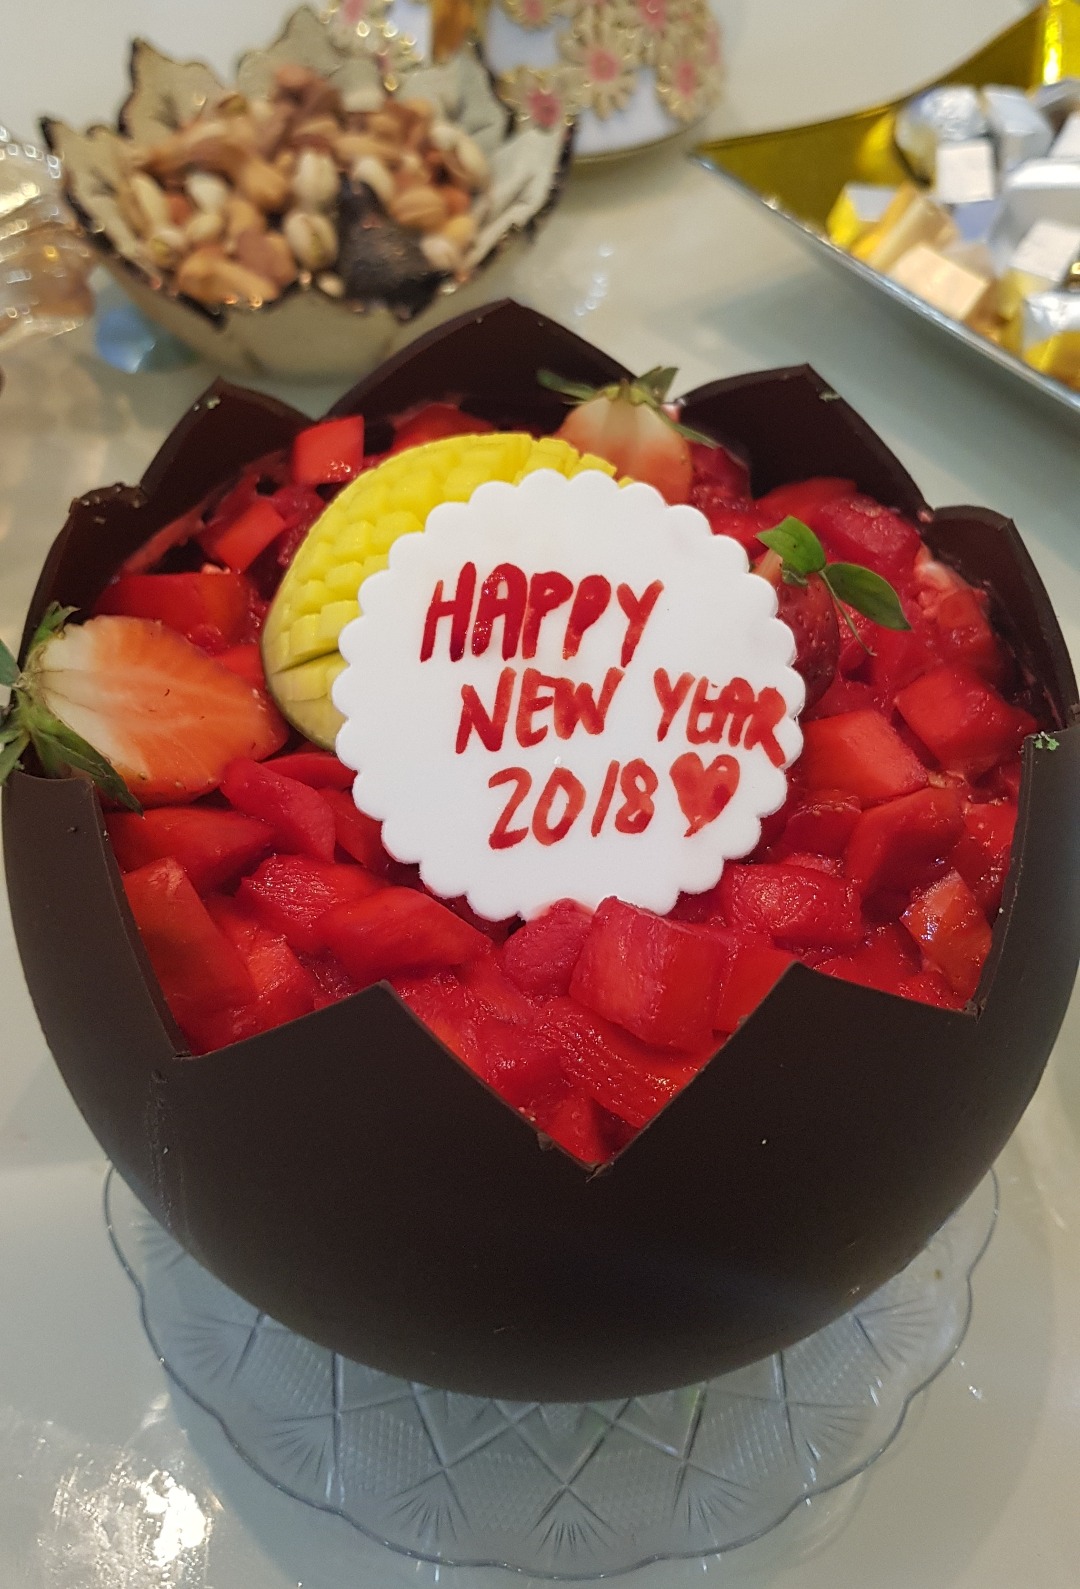 Happy New Year 2018 ❤ @ Le Petit Gateau - Bahrain